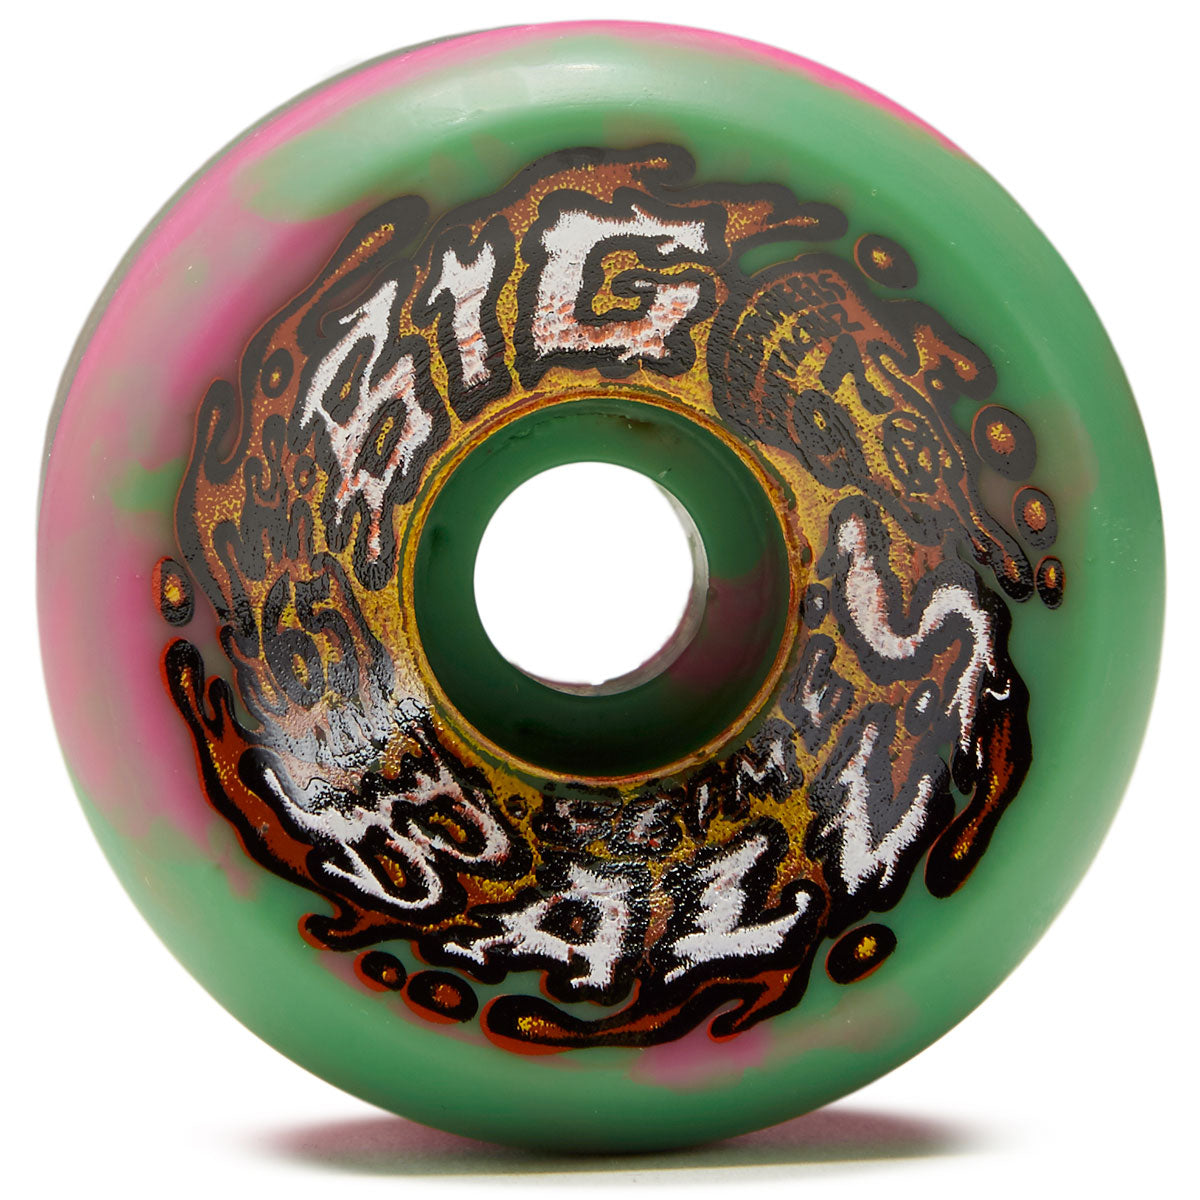 Slime Balls Big Balls 97a Skateboard Wheels - Pink/Green Swirl - 65mm image 1